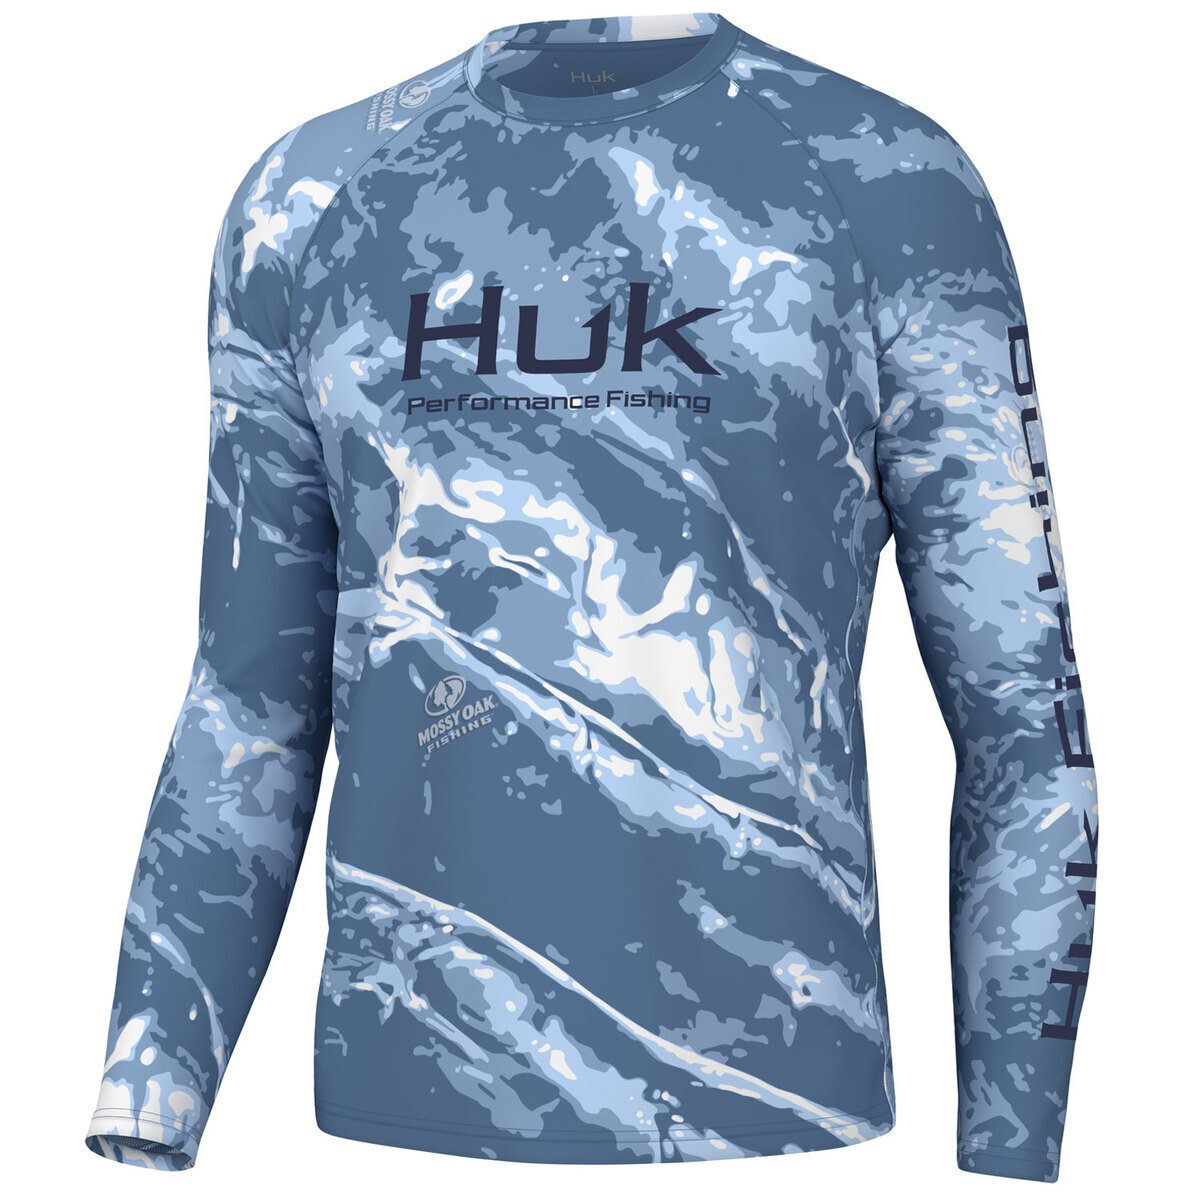 Huk Men's Mossy Oak Pursuit Performance Long Sleeve Fishing Shirt -  Stormwater Spindrift - L